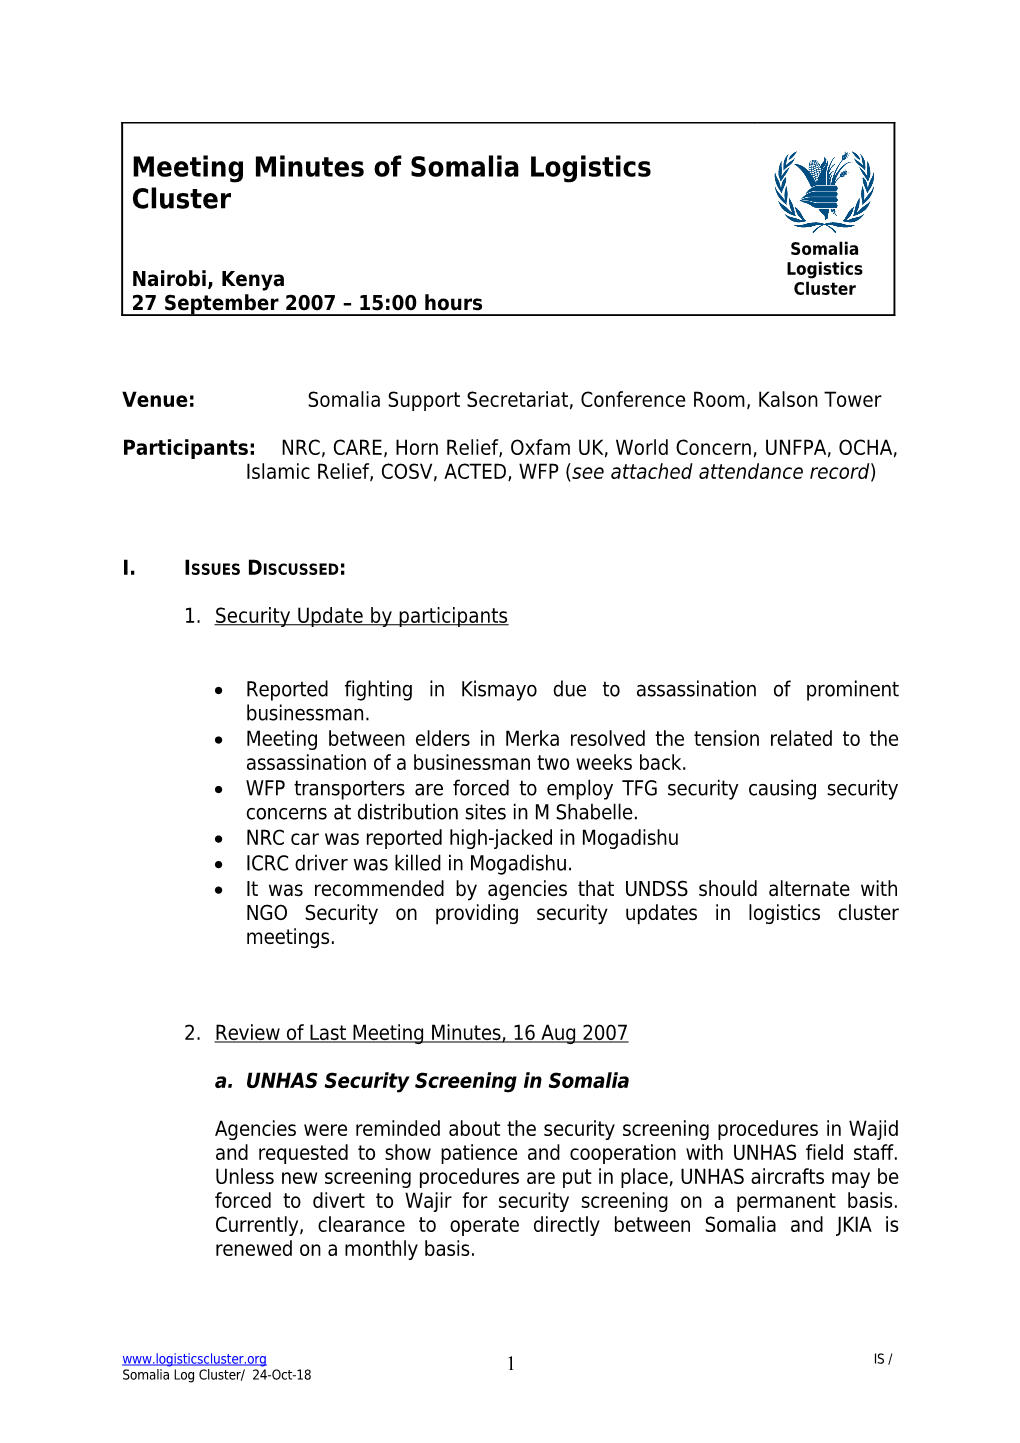 Minutes of Logistics Cluster in Kenya